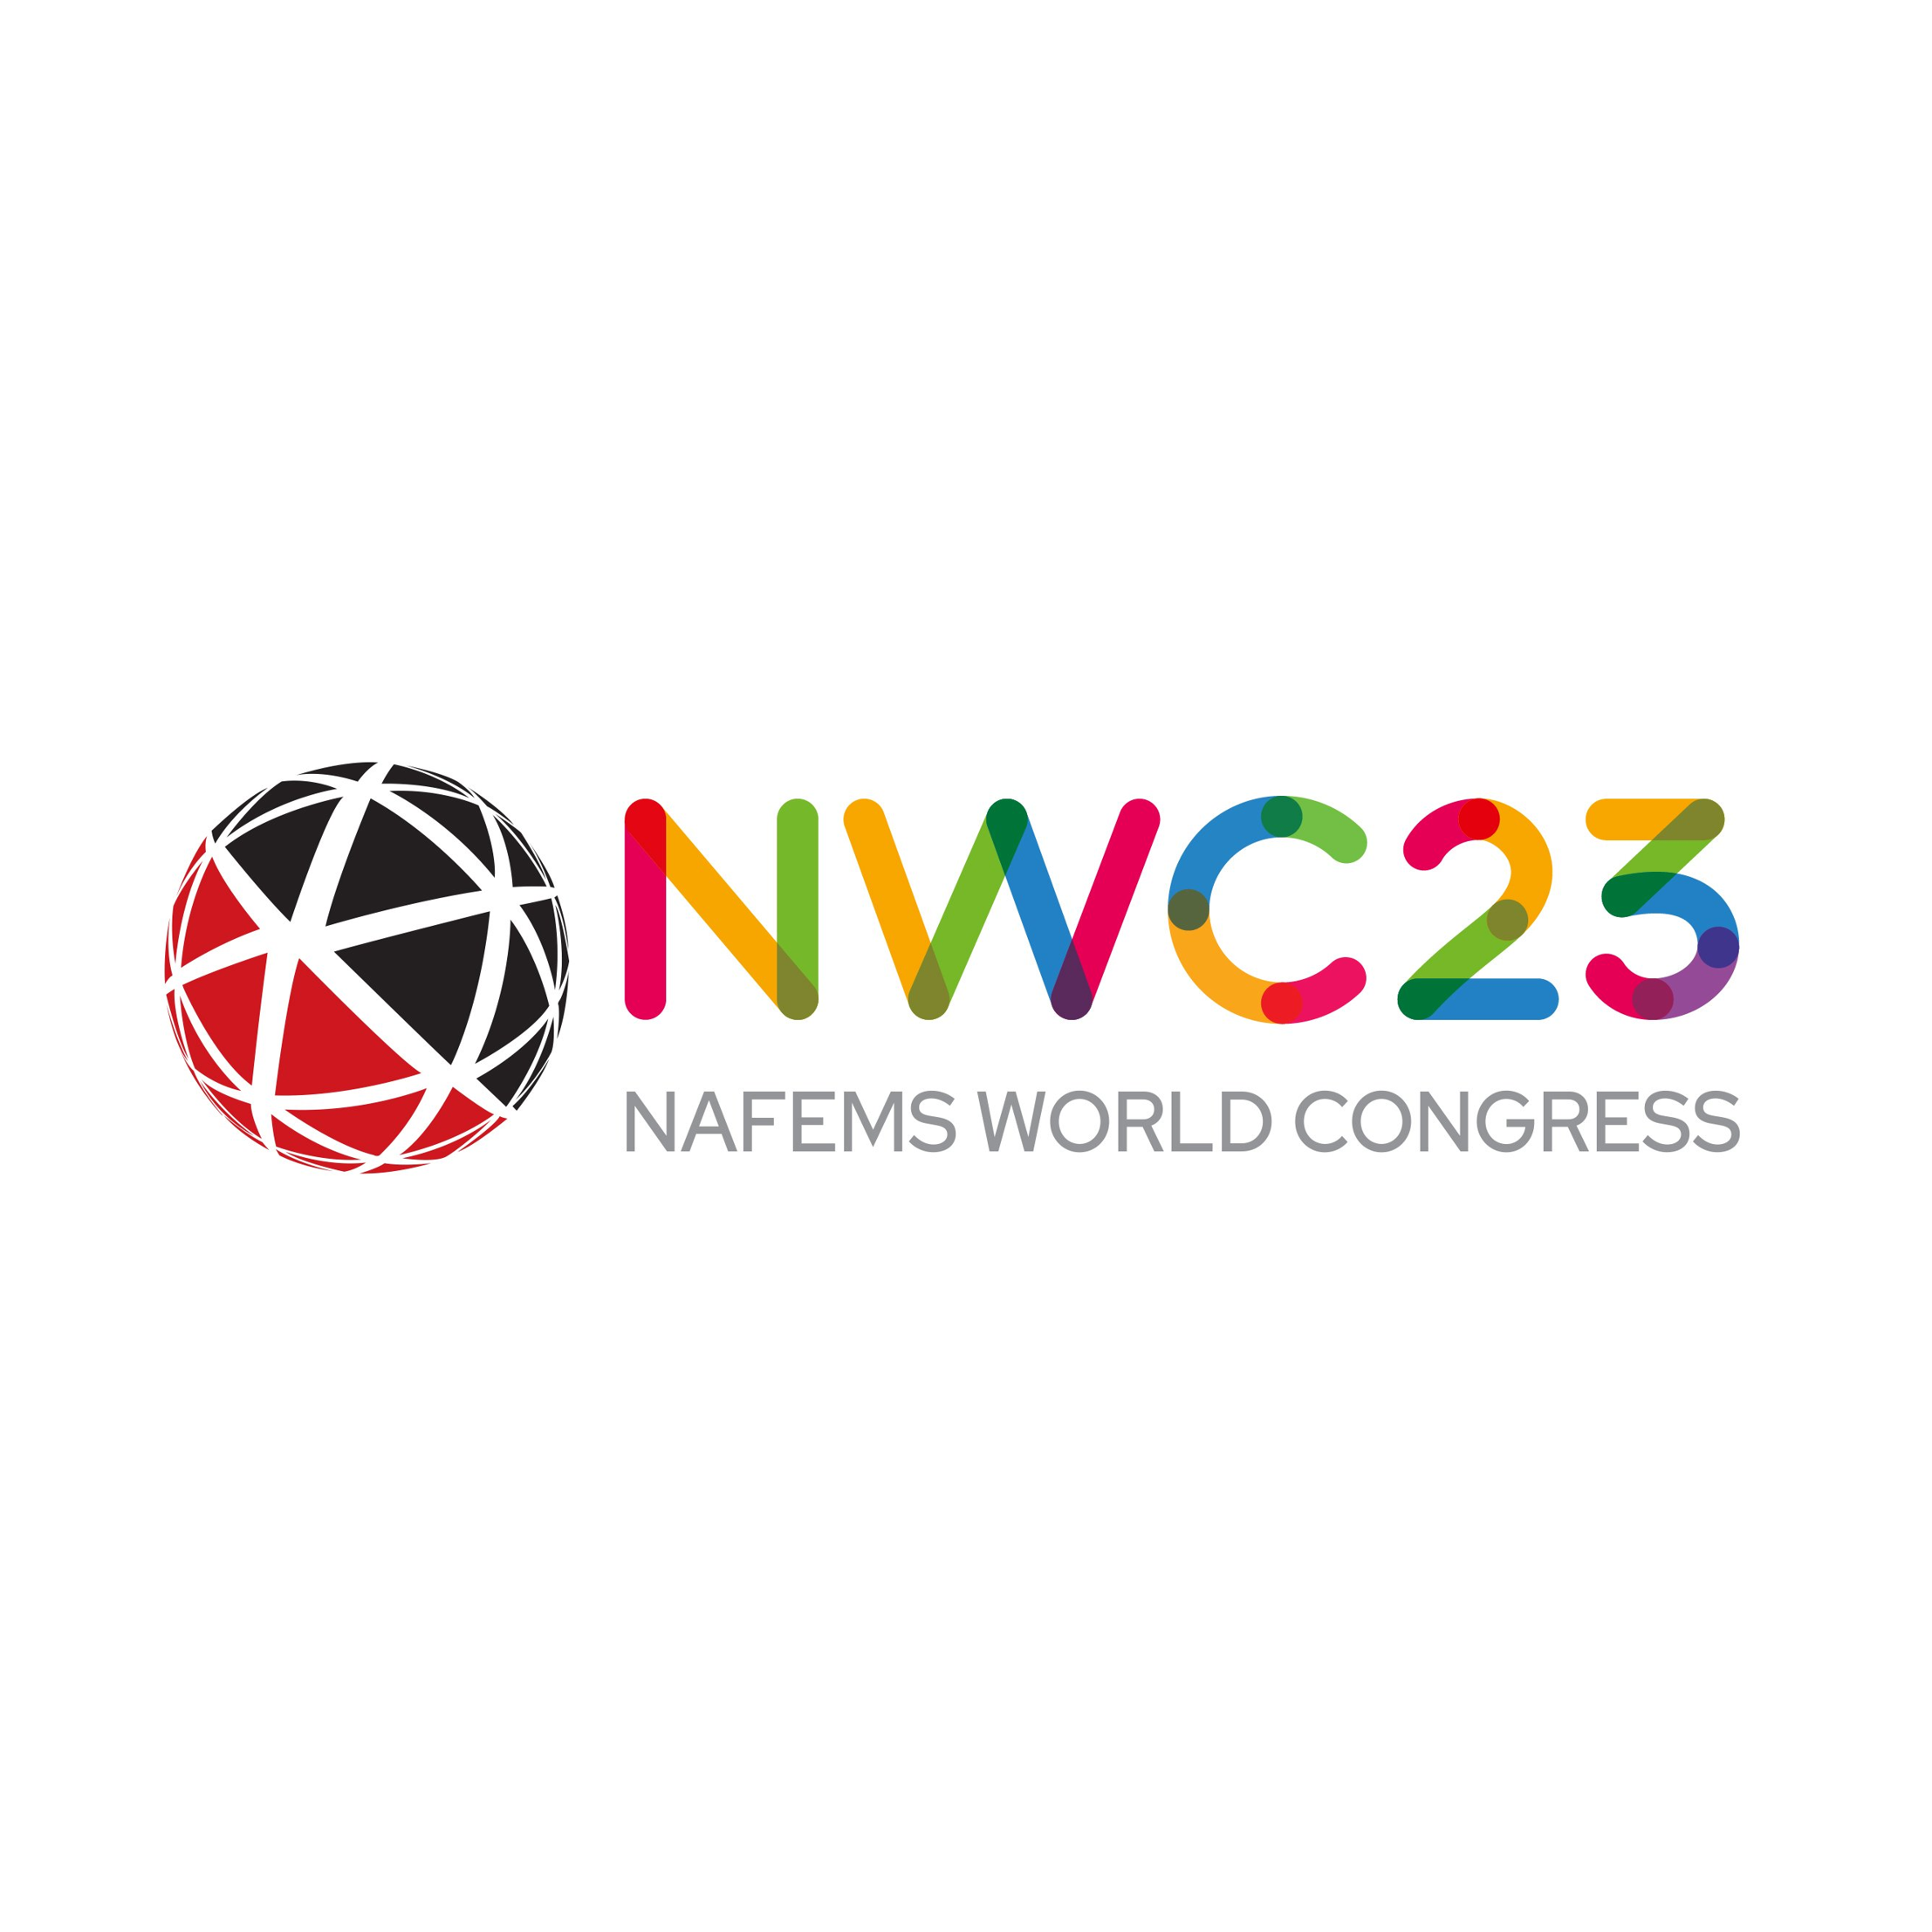 NAFEMS World Congress 2023 Logo